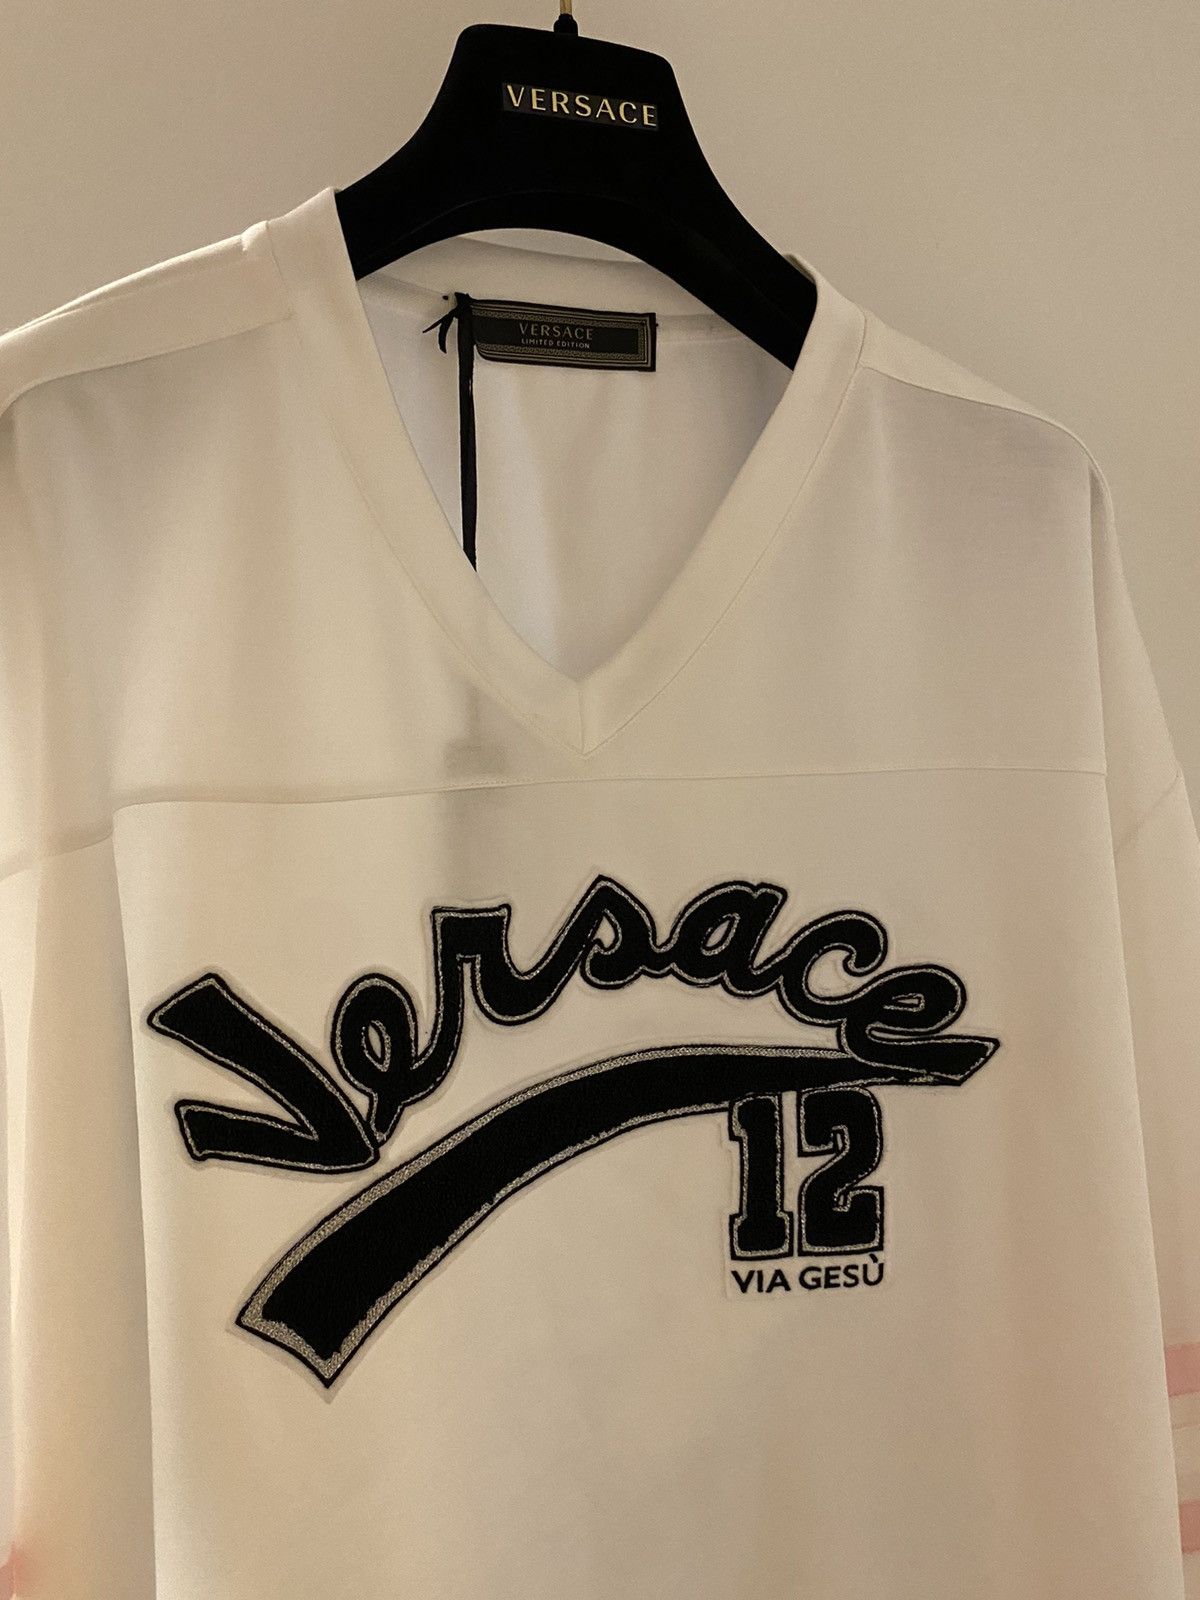 Versace Limited Edition Via Gesu Runway Jersey T-shirt $1,050 New Size US L / EU 52-54 / 3 - 15 Thumbnail